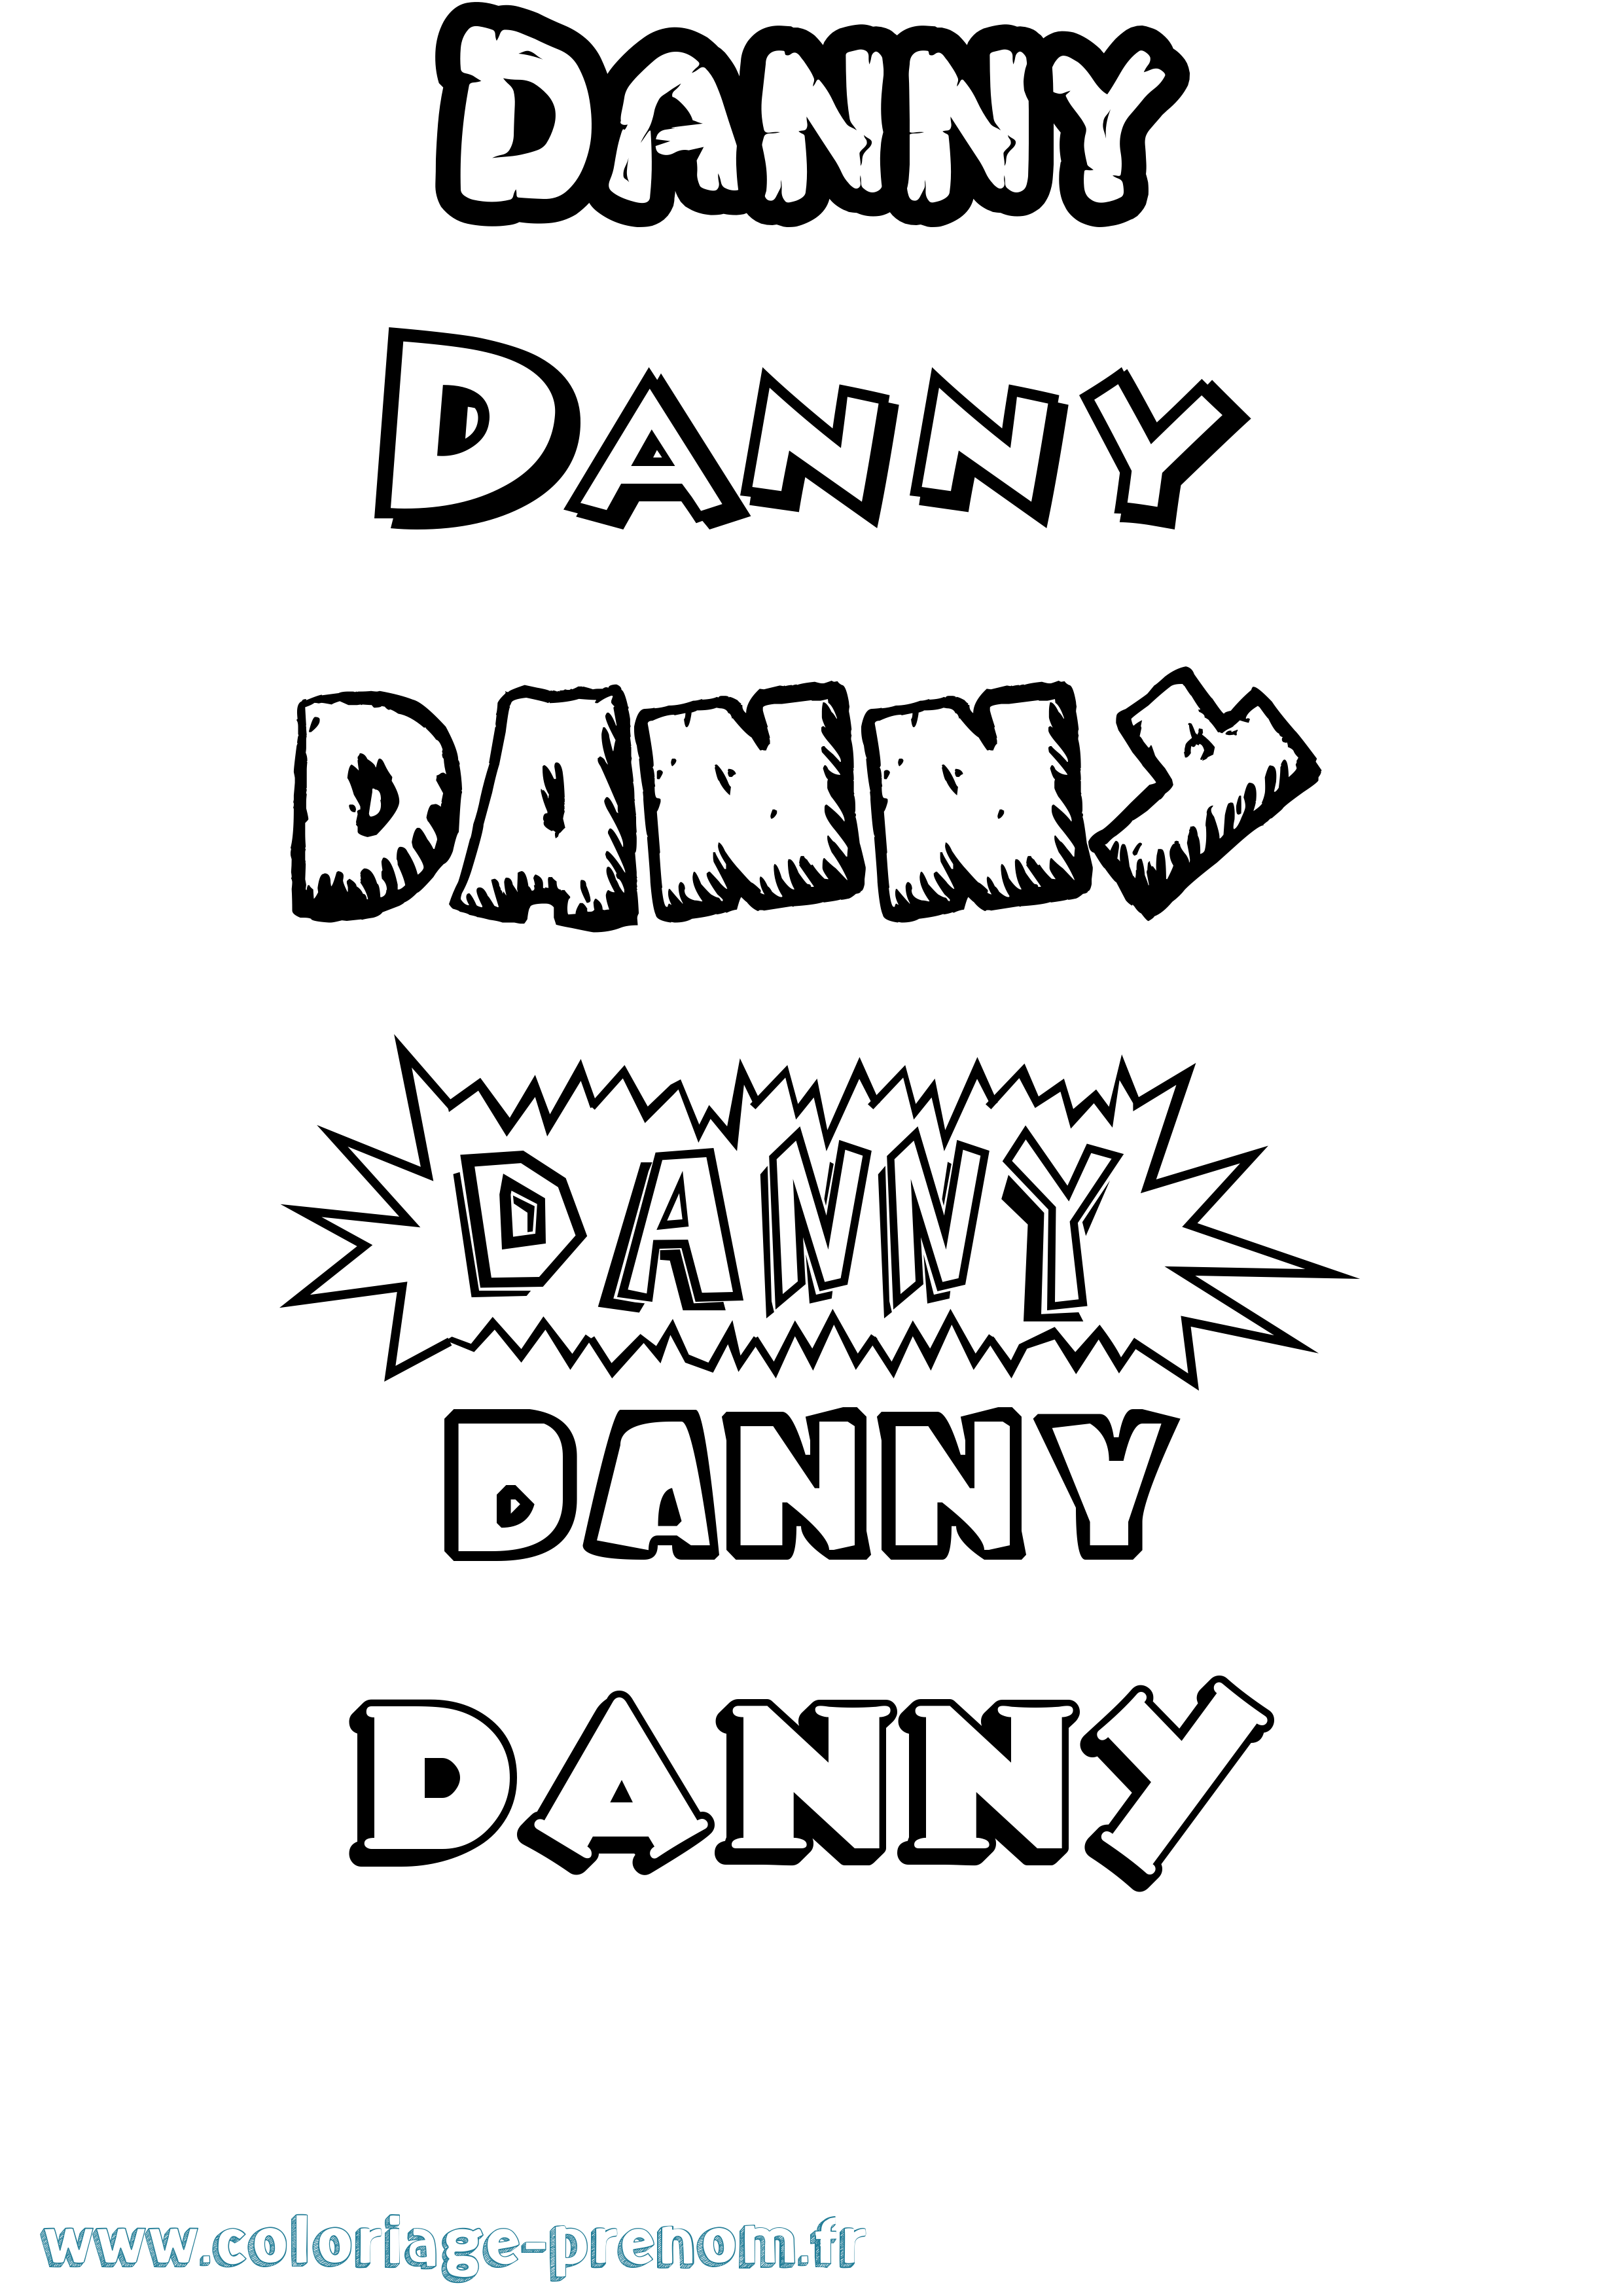 Coloriage prénom Danny